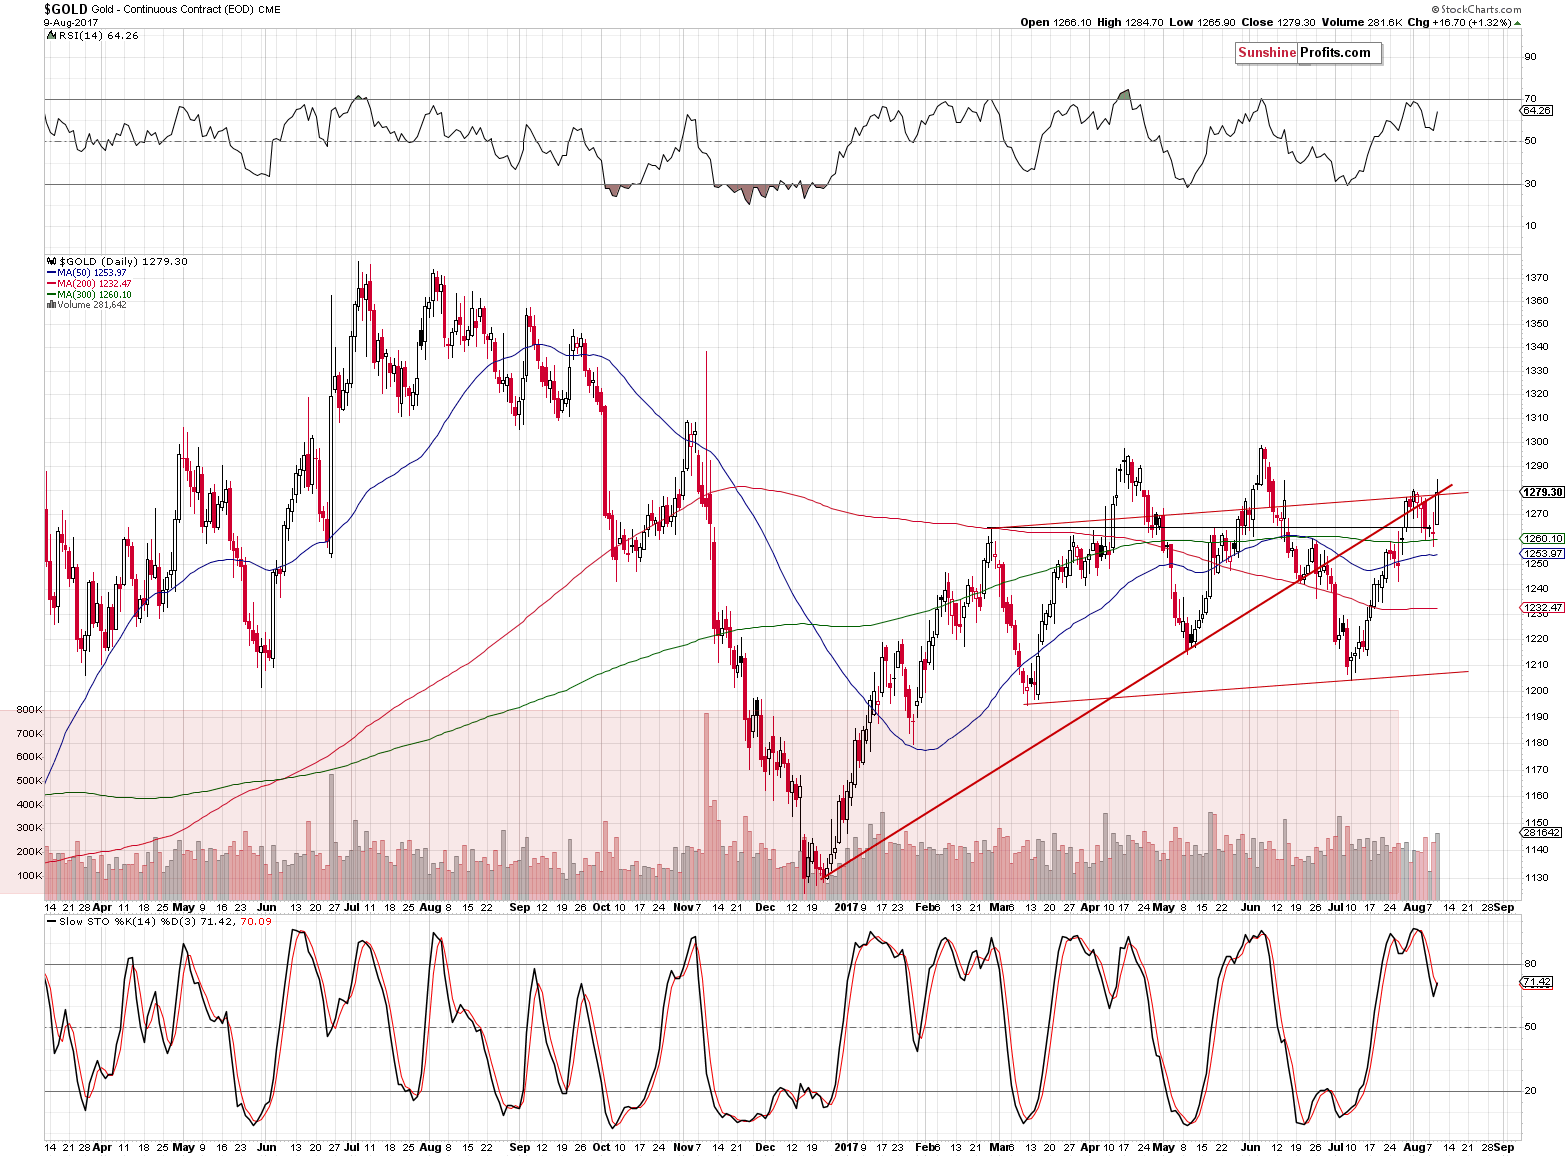 Short-term Gold price chart - Gold spot price